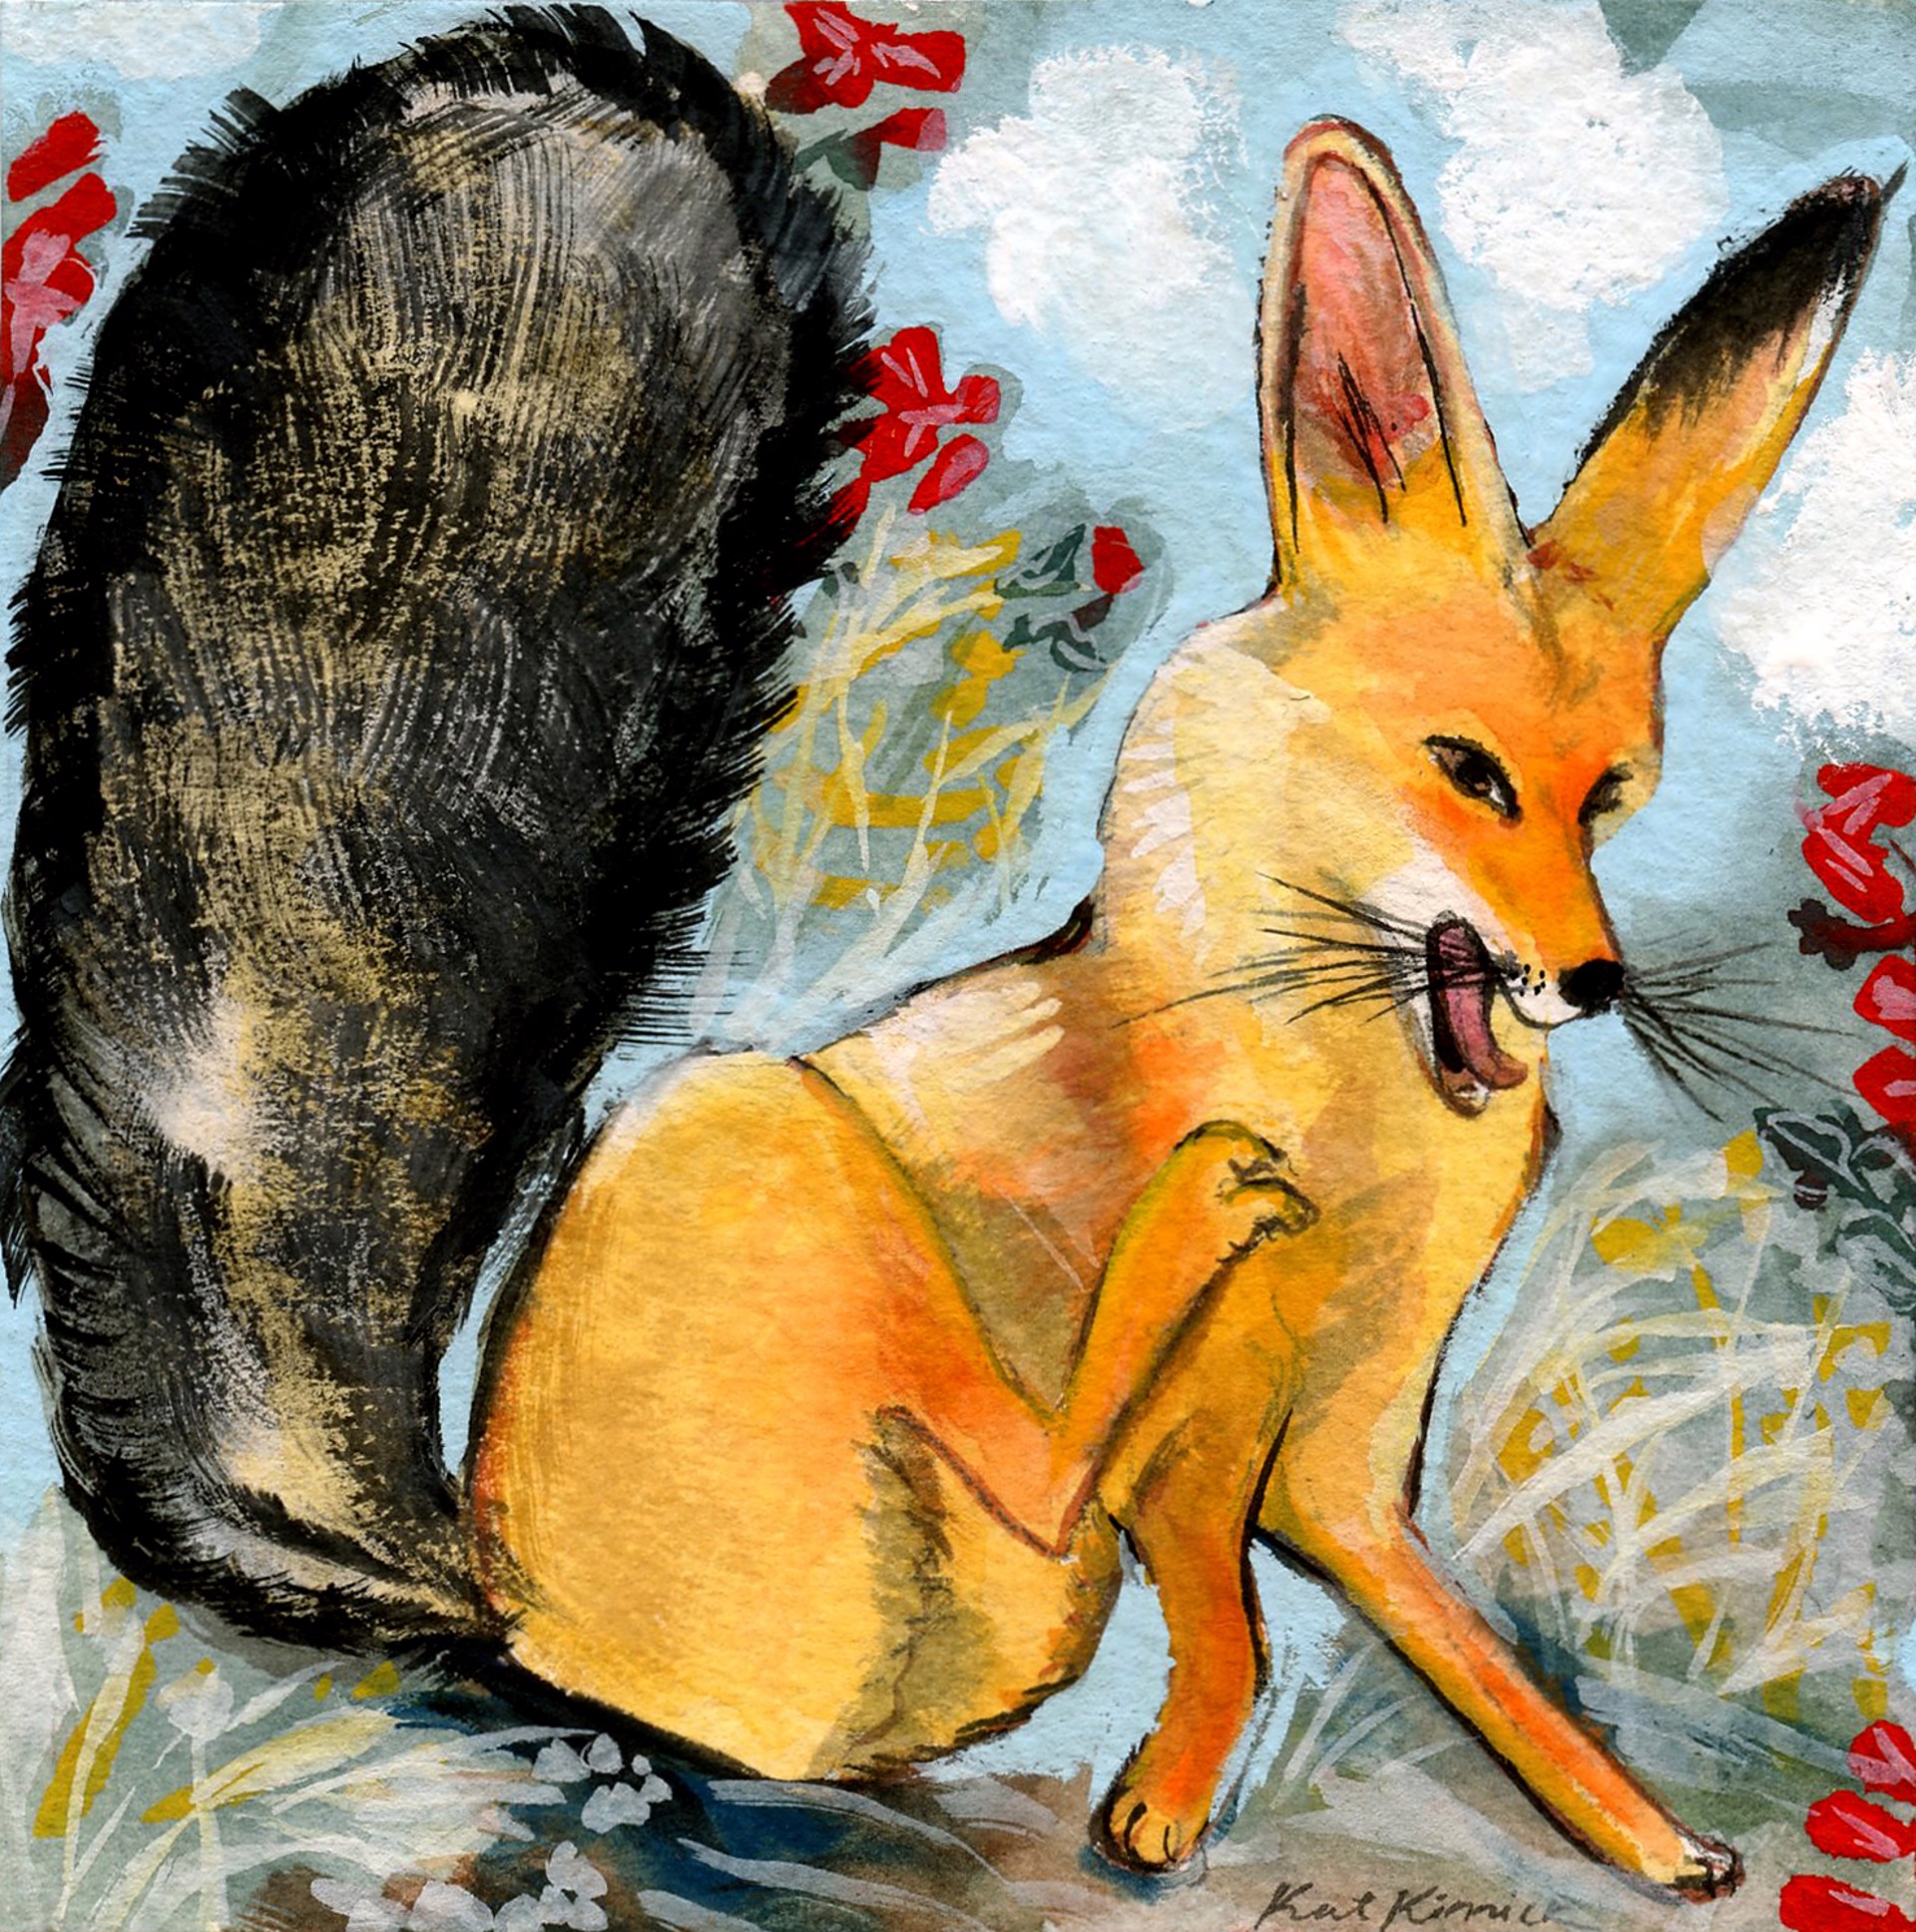 Scratching Fox by Kat Kinnick